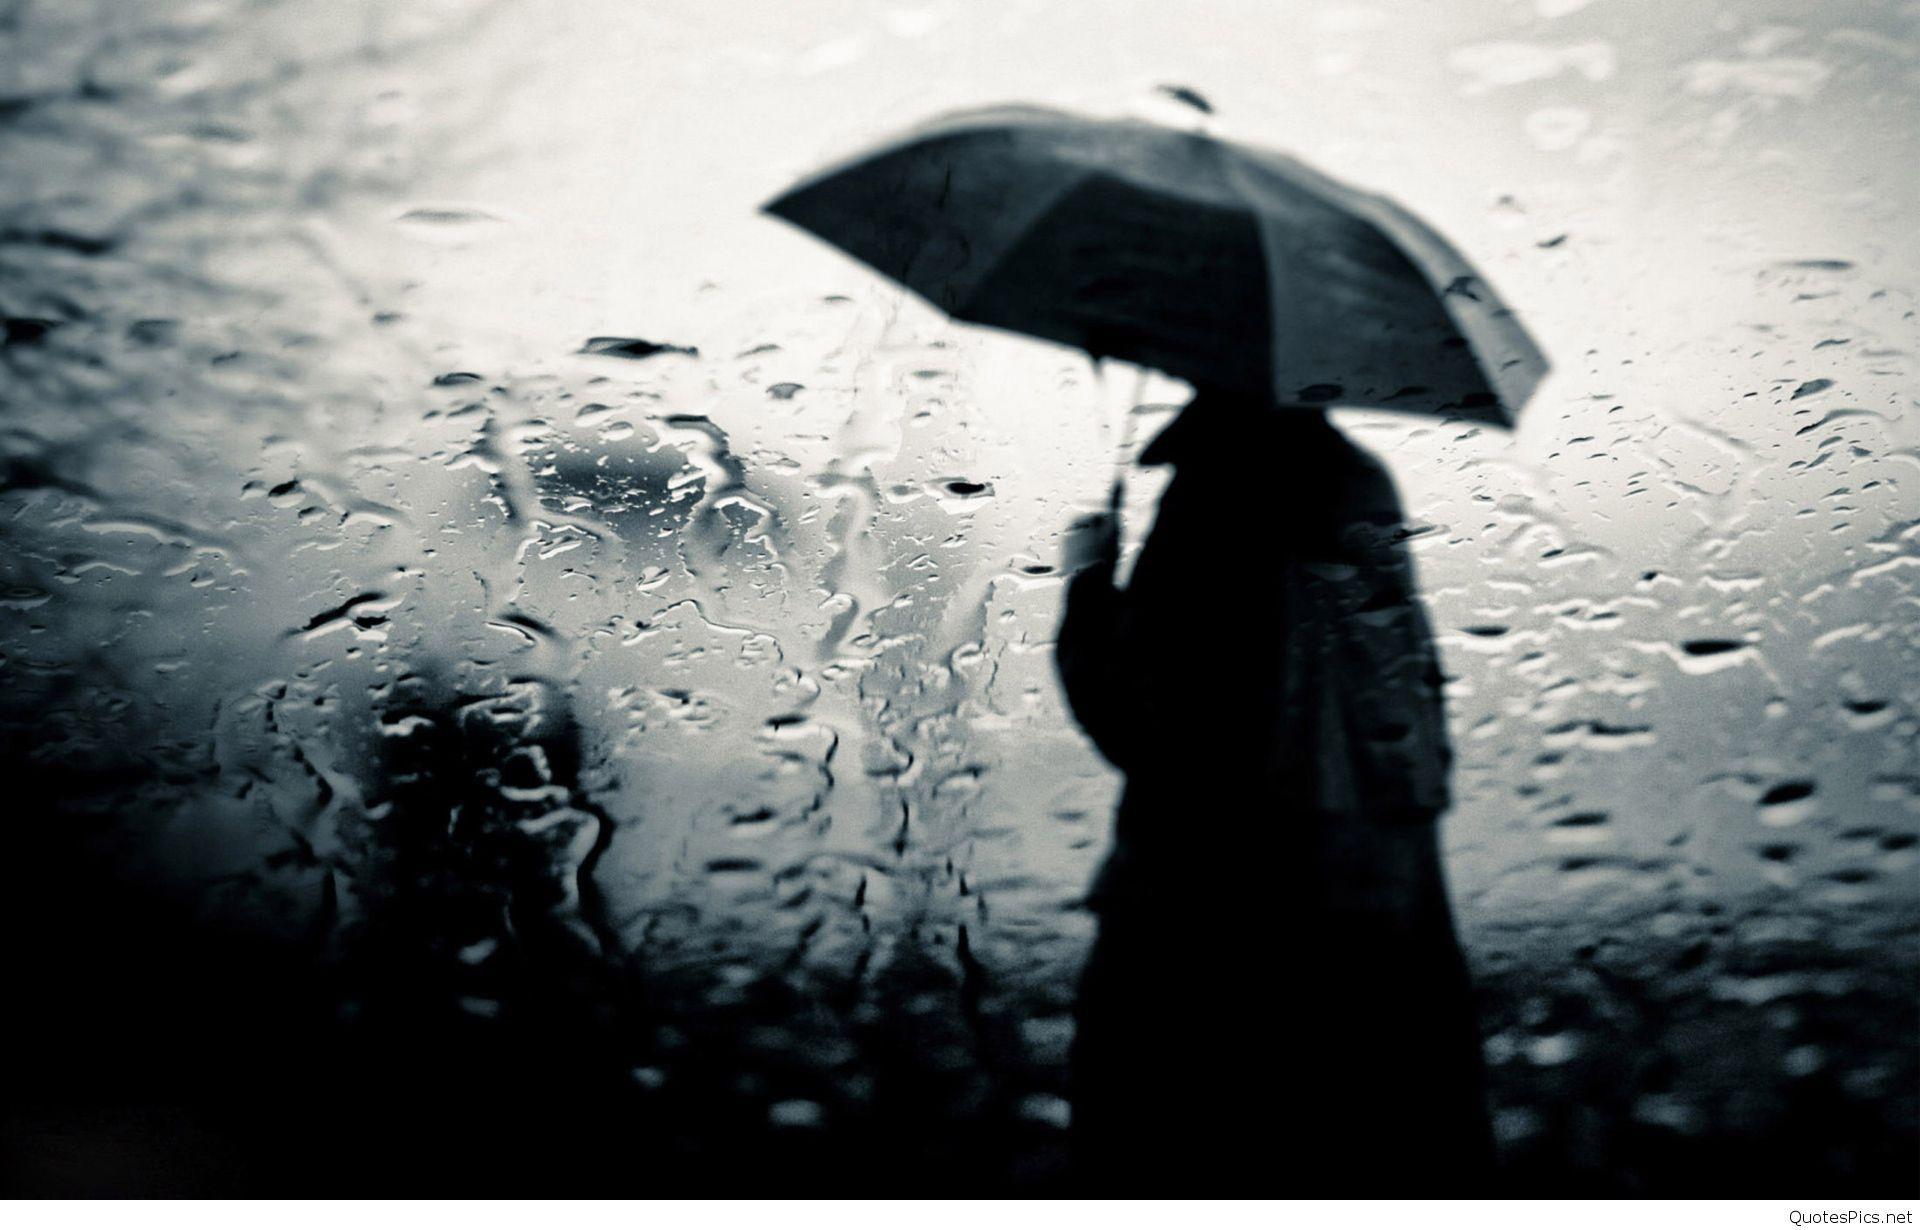 Sad Lonely Alone Boy Walking In Rain With Umbrella In Hand Photo